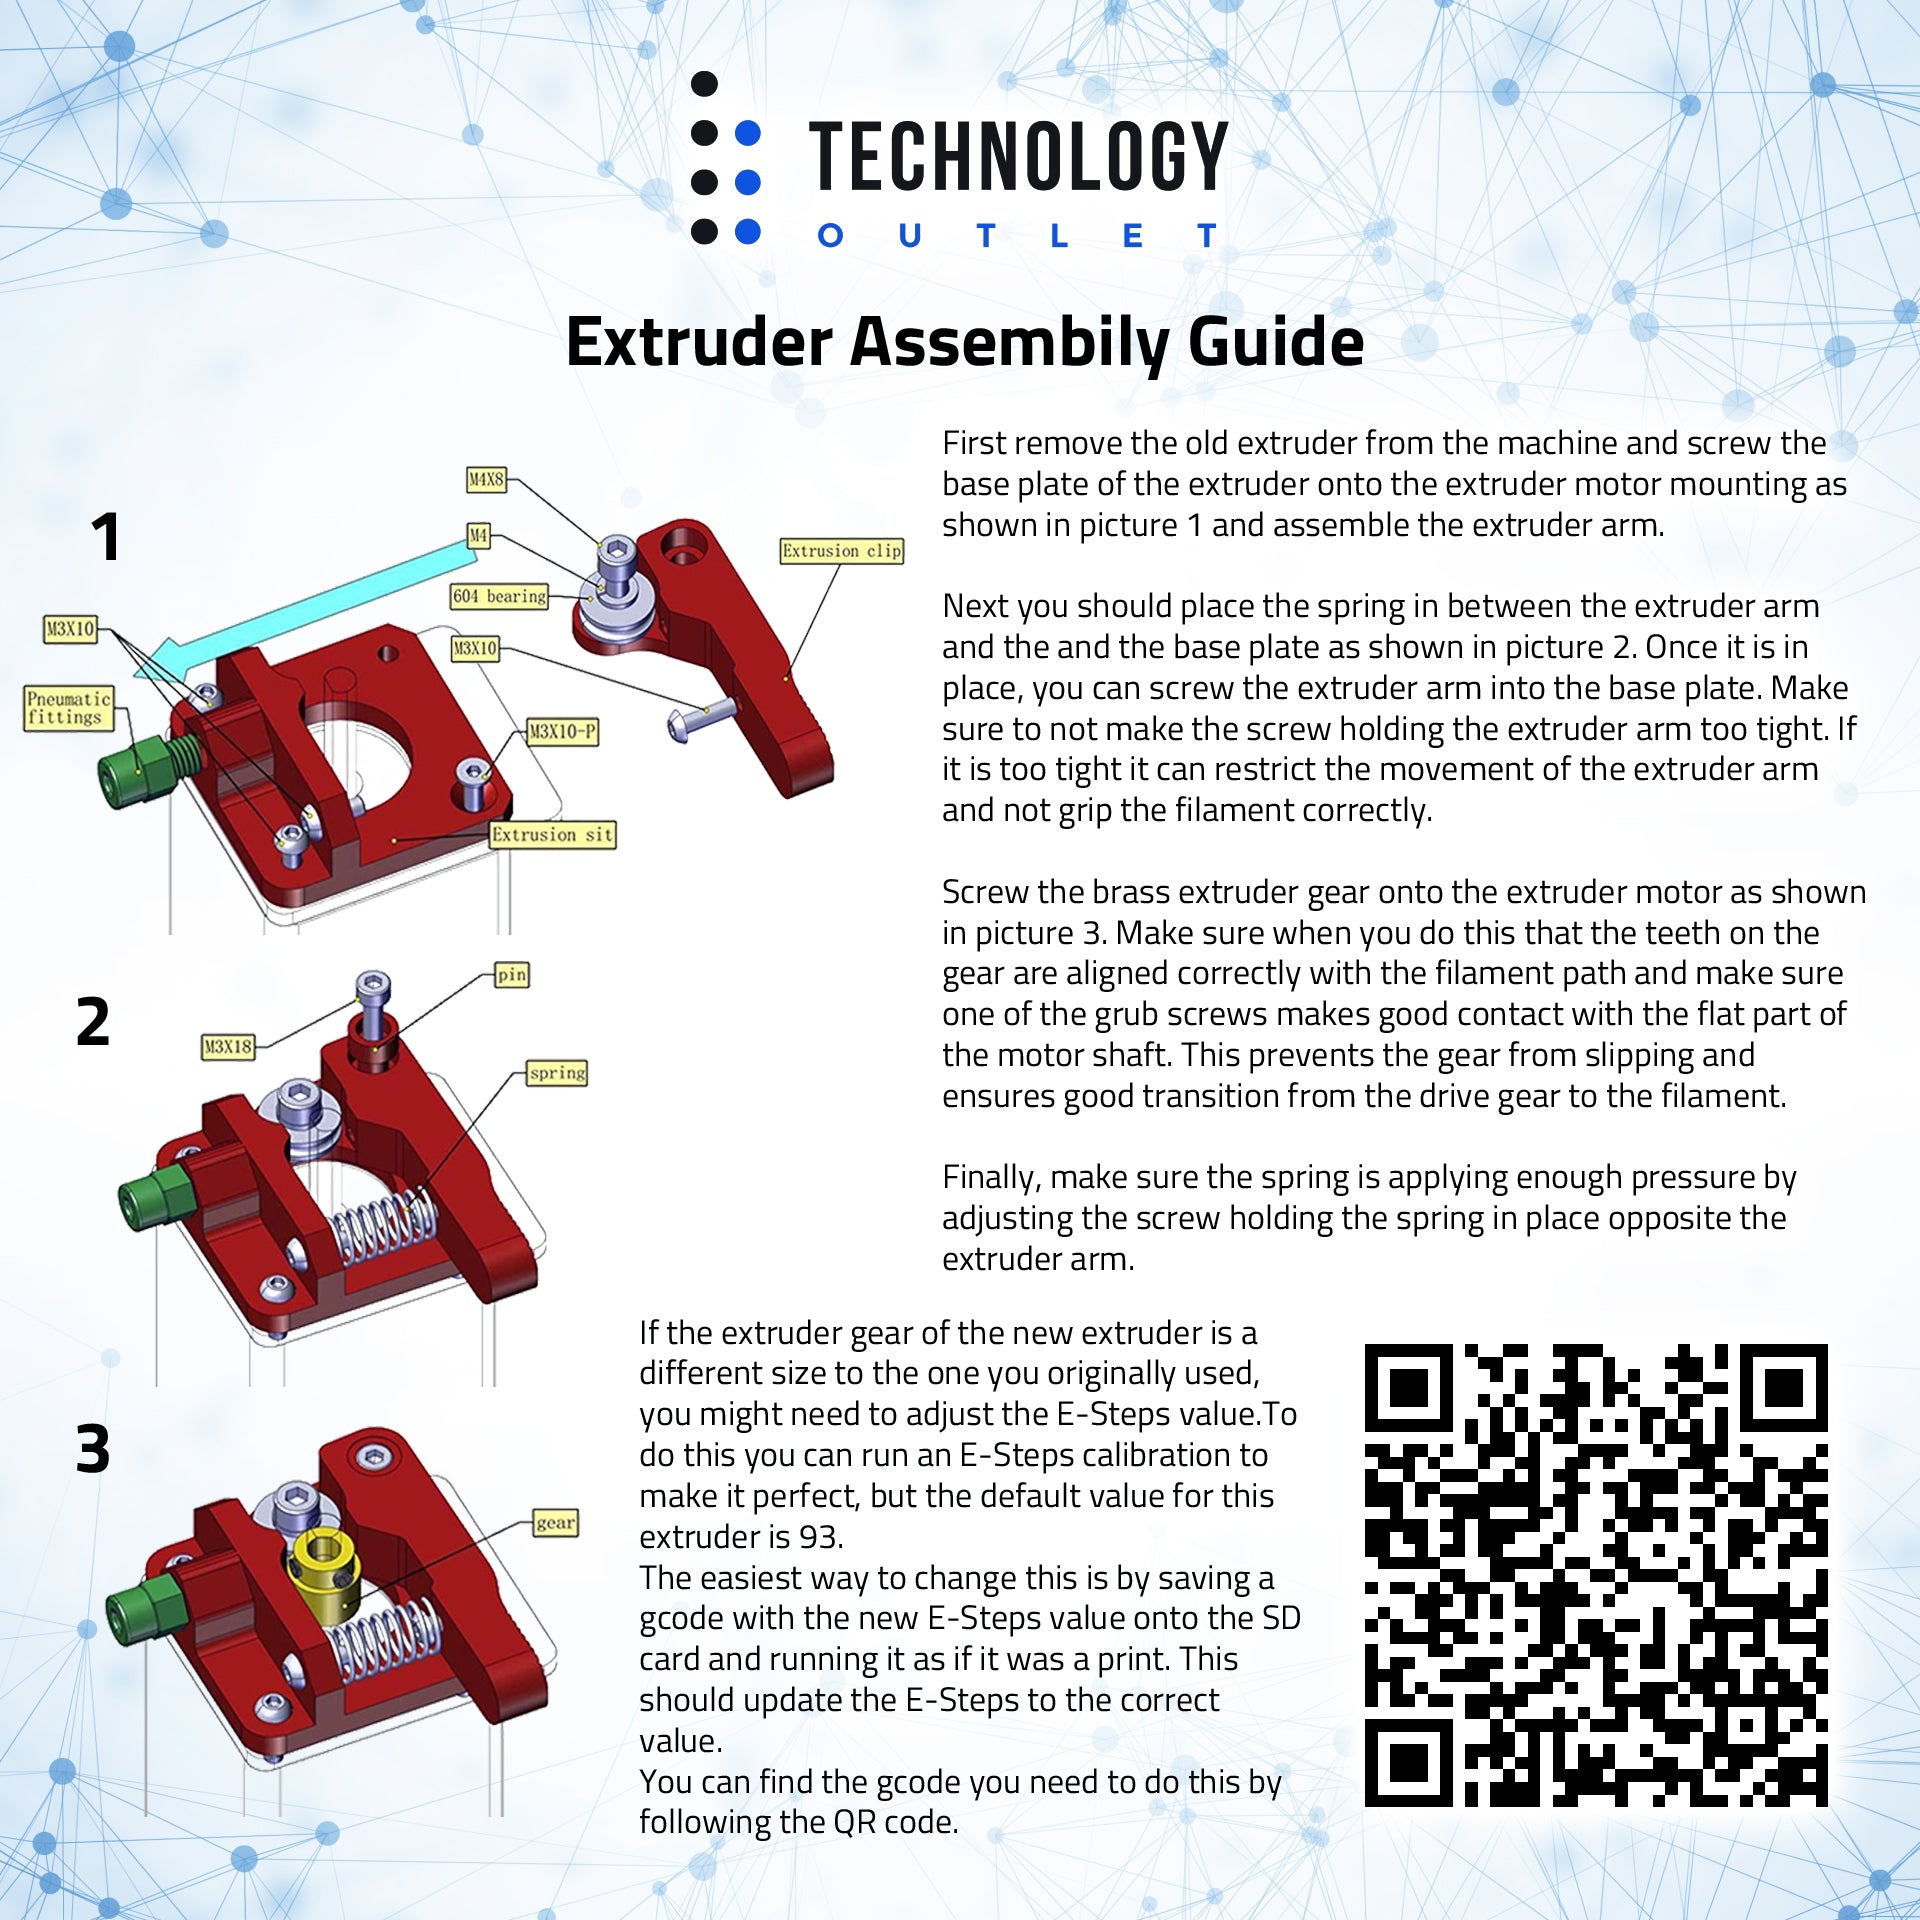 Extruder Assembily guide